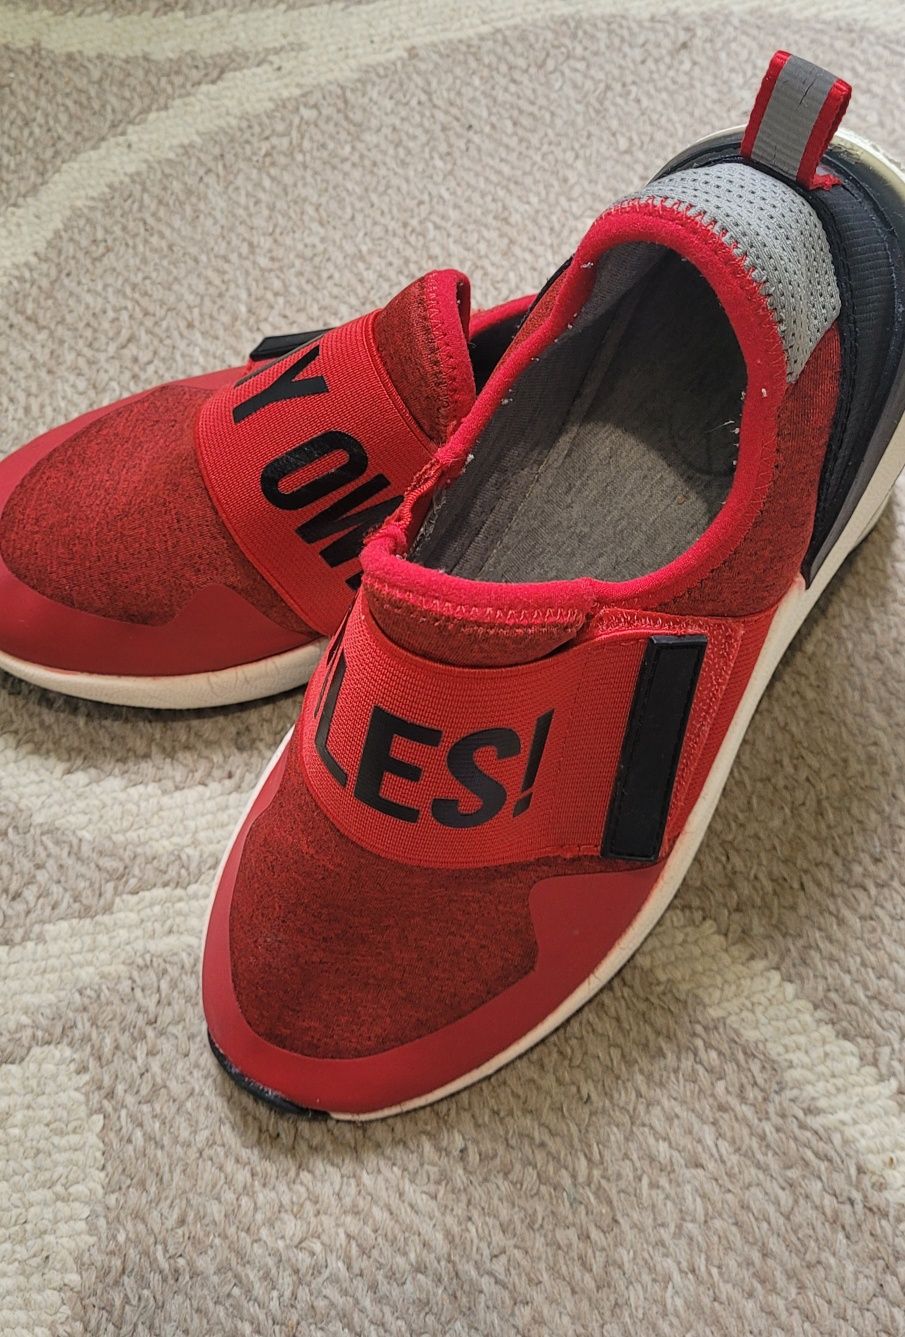 Pantofi sport Zara, roșii, marime 36